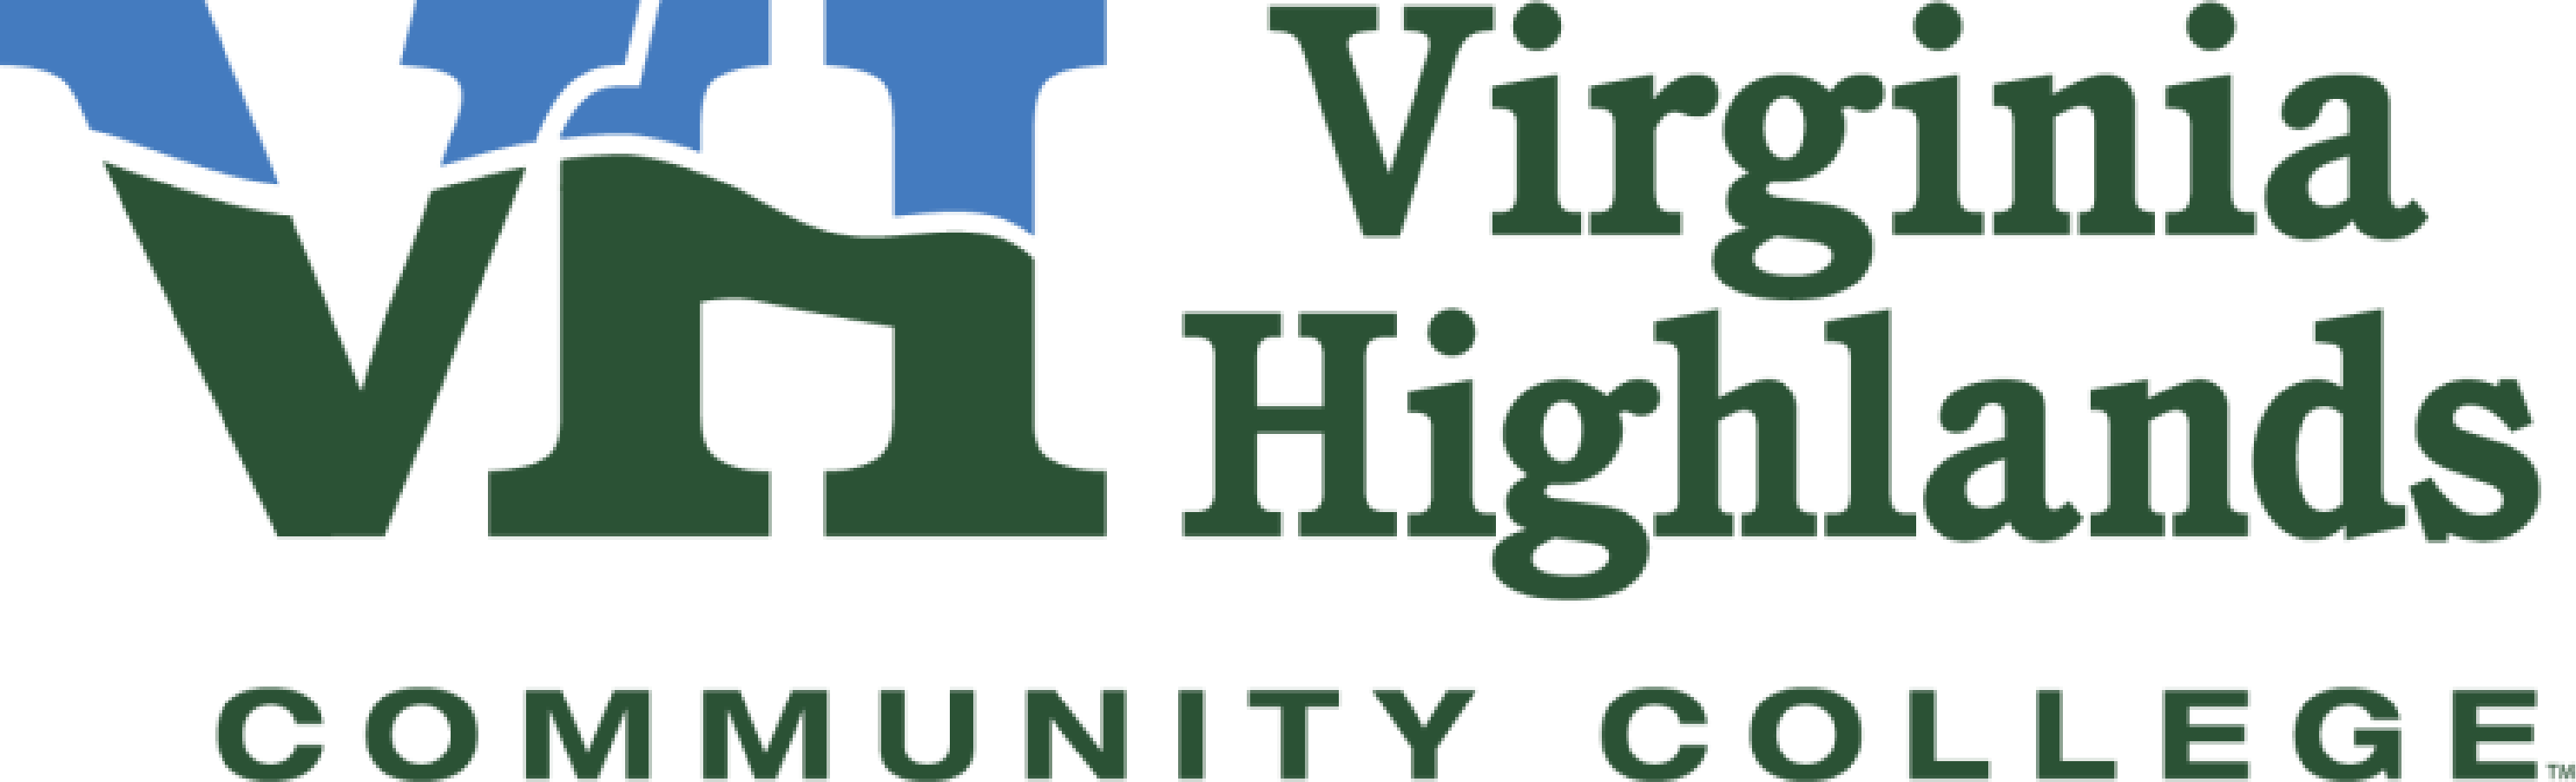 Virginia Highlands Community College